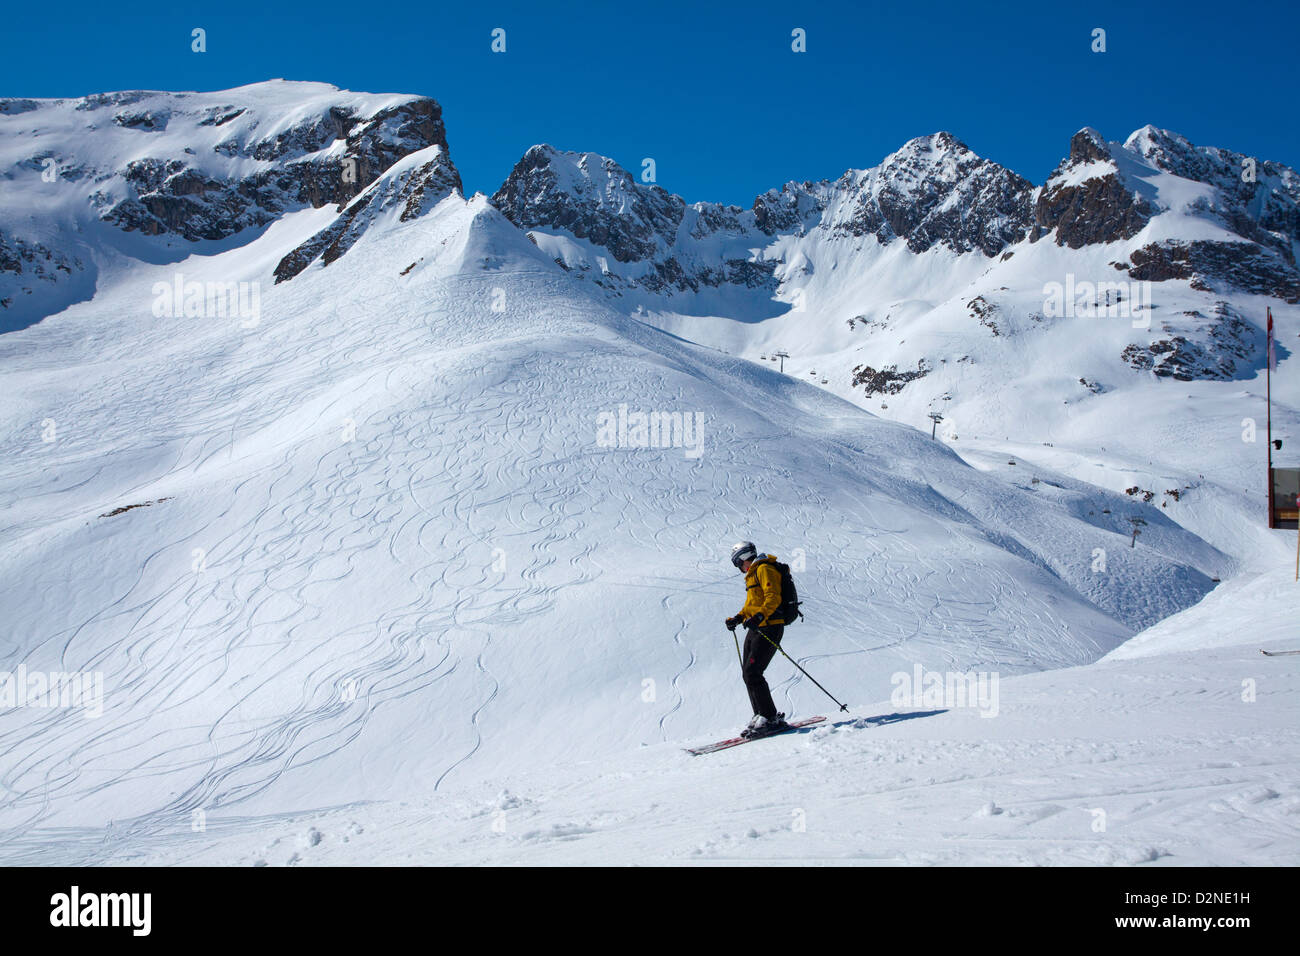 Skiing on the pistes above Zurs, Arlberg, Austria. Stock Photo